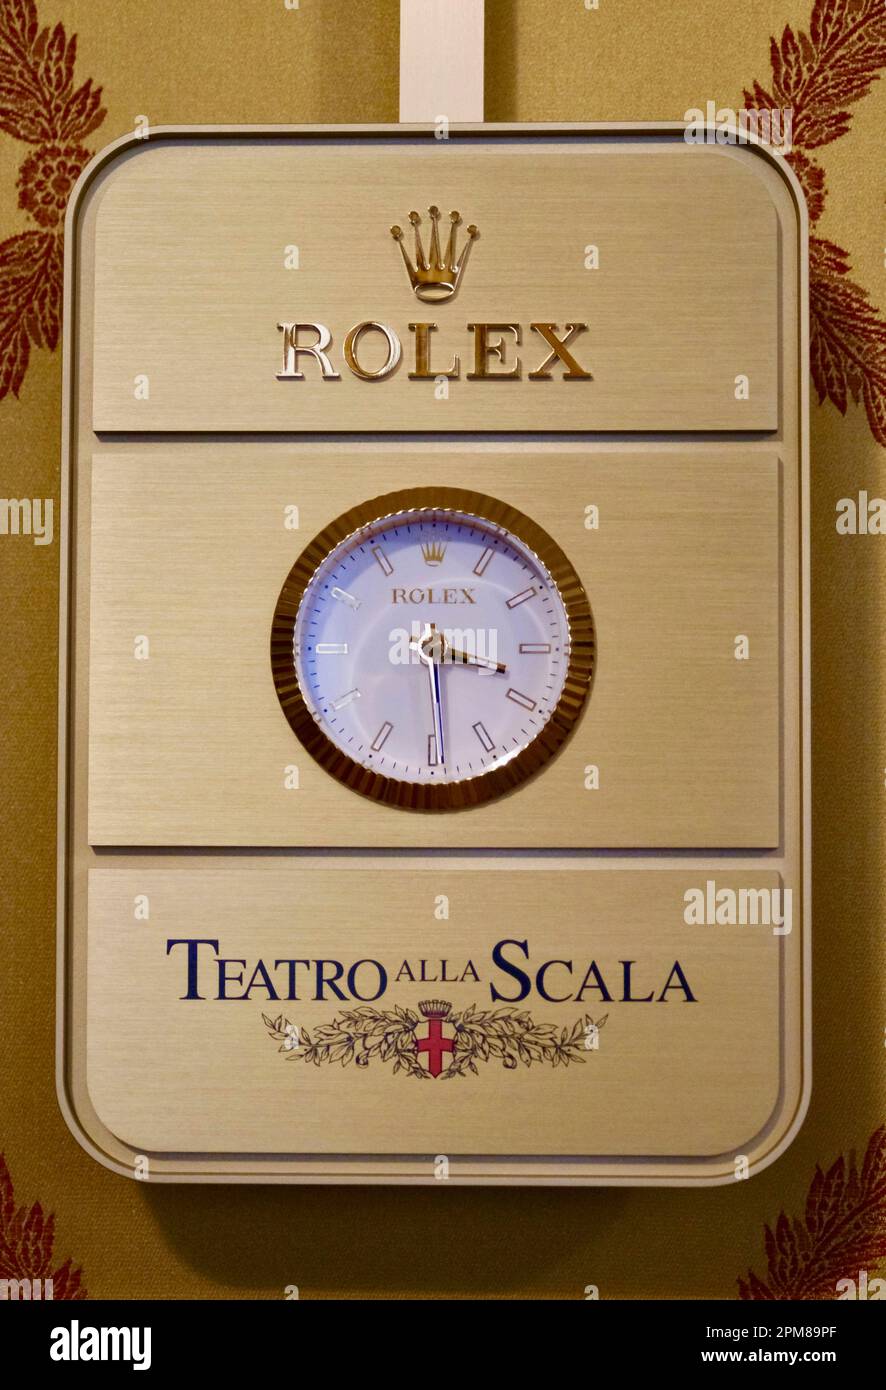 Italy, Lombardy, Milan, Piazza della Scala, museum of the Italian opera theater La Scala inaugurated in 1778 and designed by architect Giuseppe Piermarini, Rolex clock Stock Photo